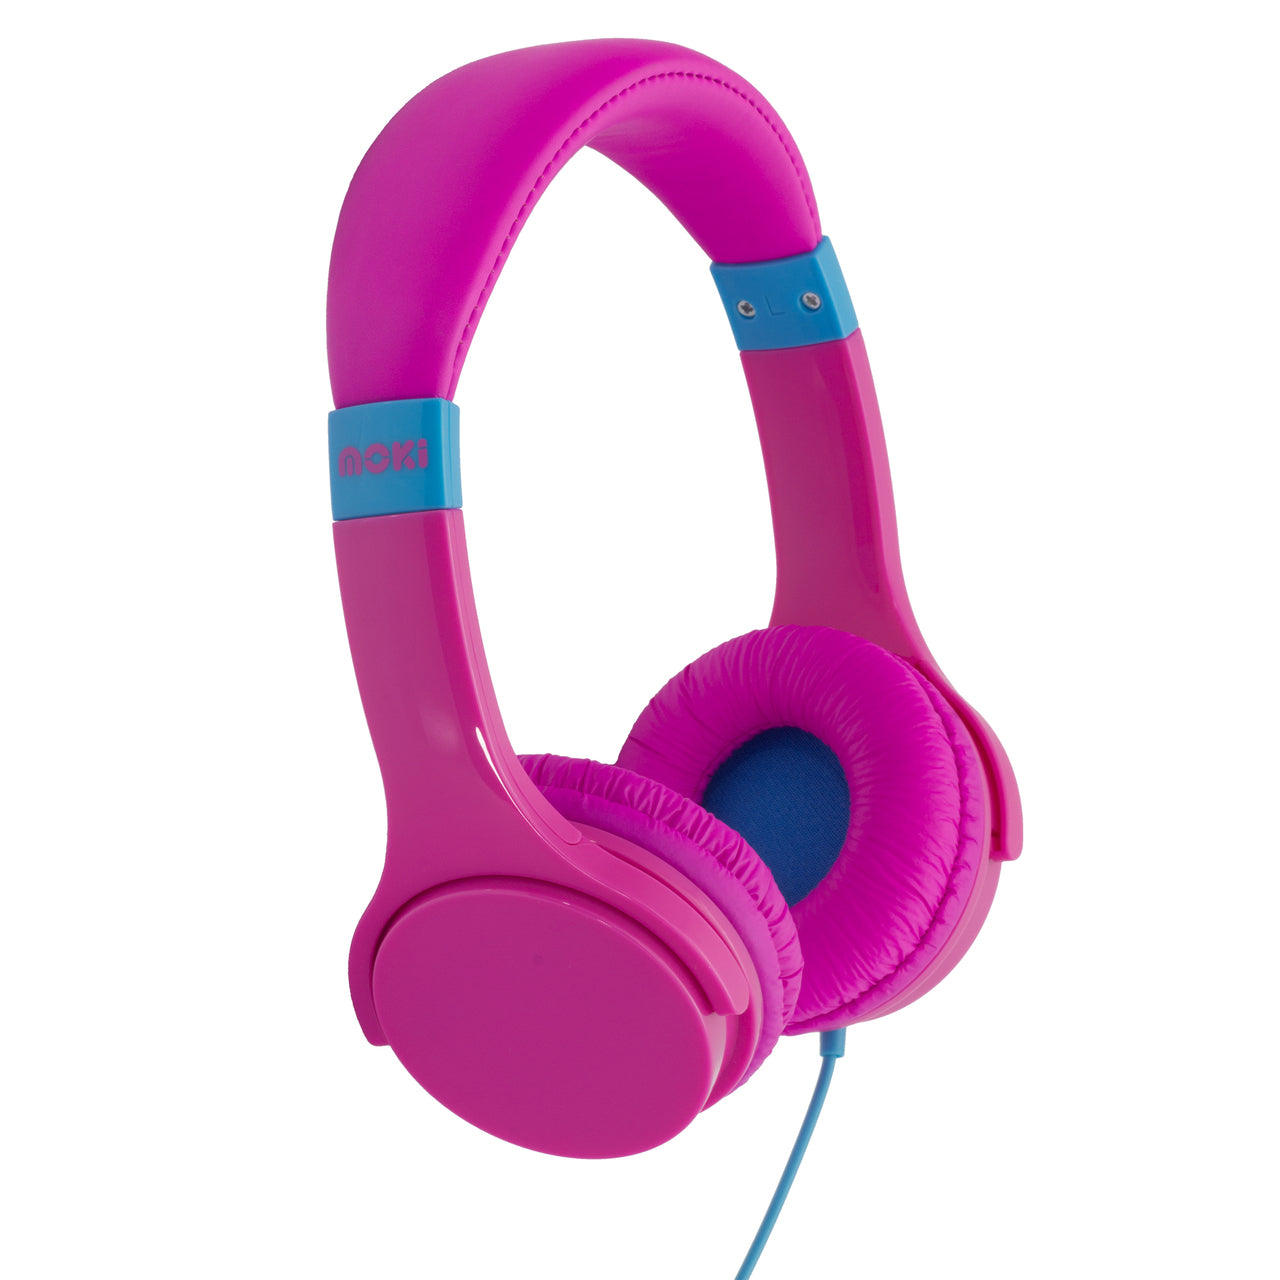 Lil' Kids Headphones - pink